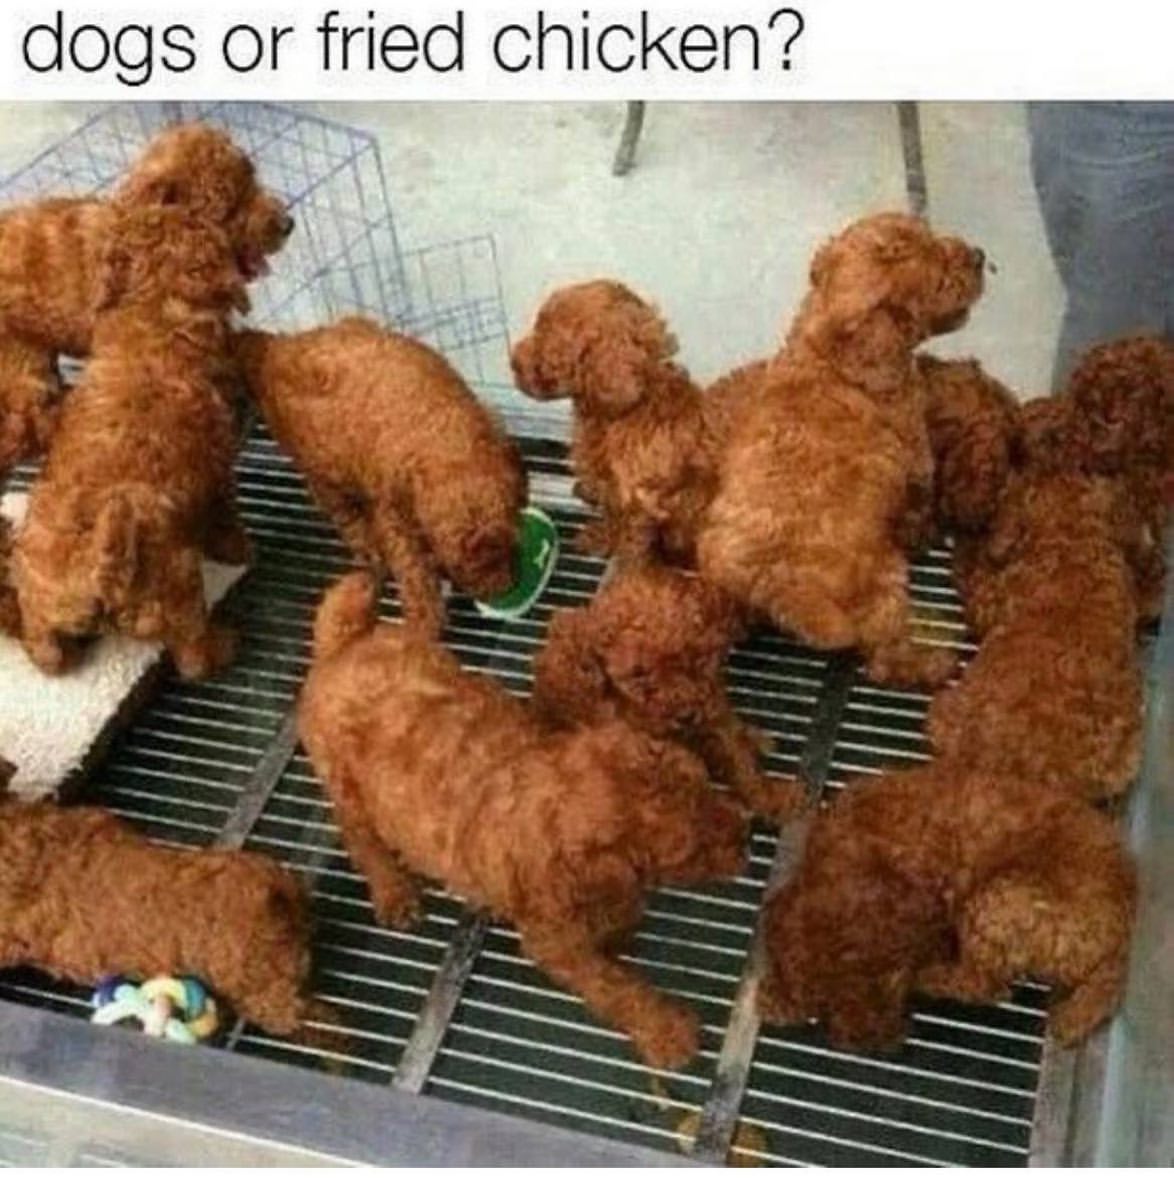 Dog or fried chicken?